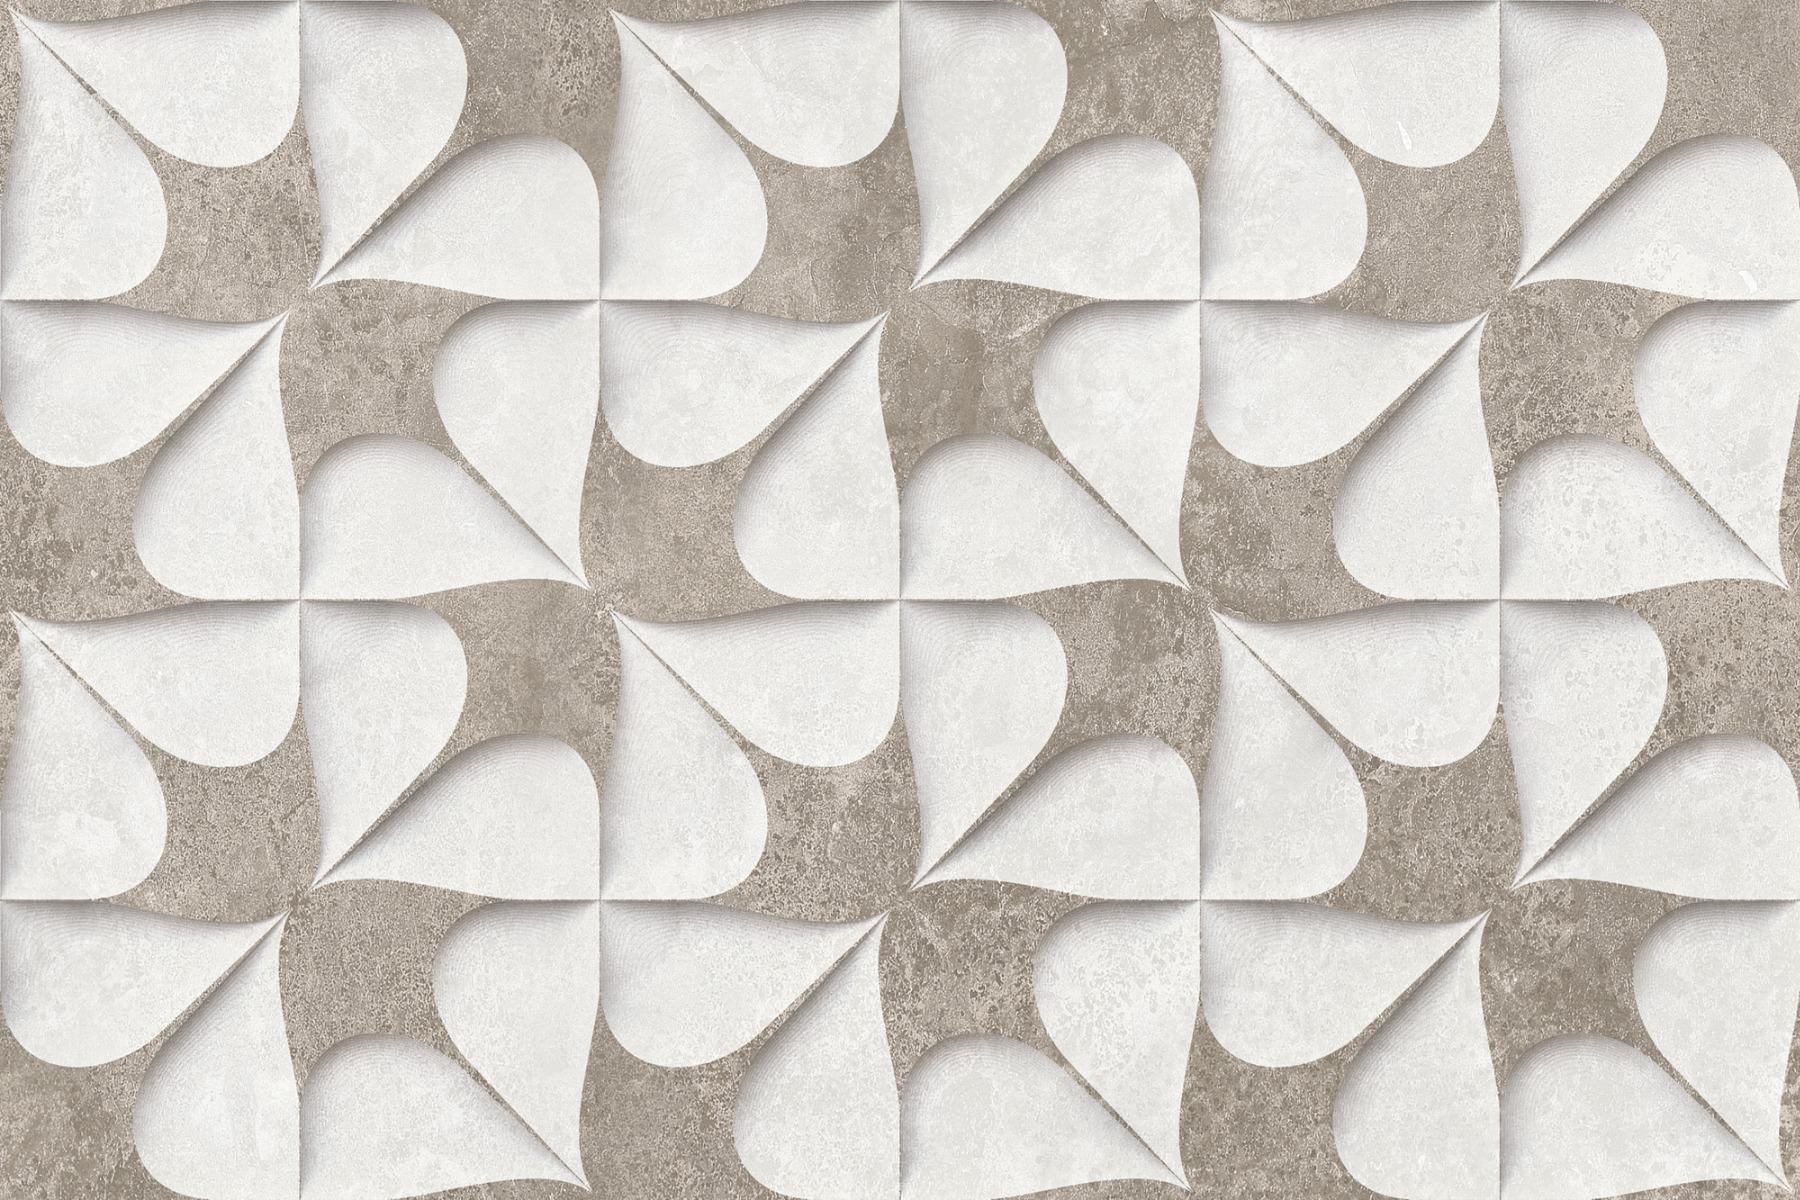 Stylized Tiles for Bathroom Tiles, Kitchen Tiles, Balcony Tiles